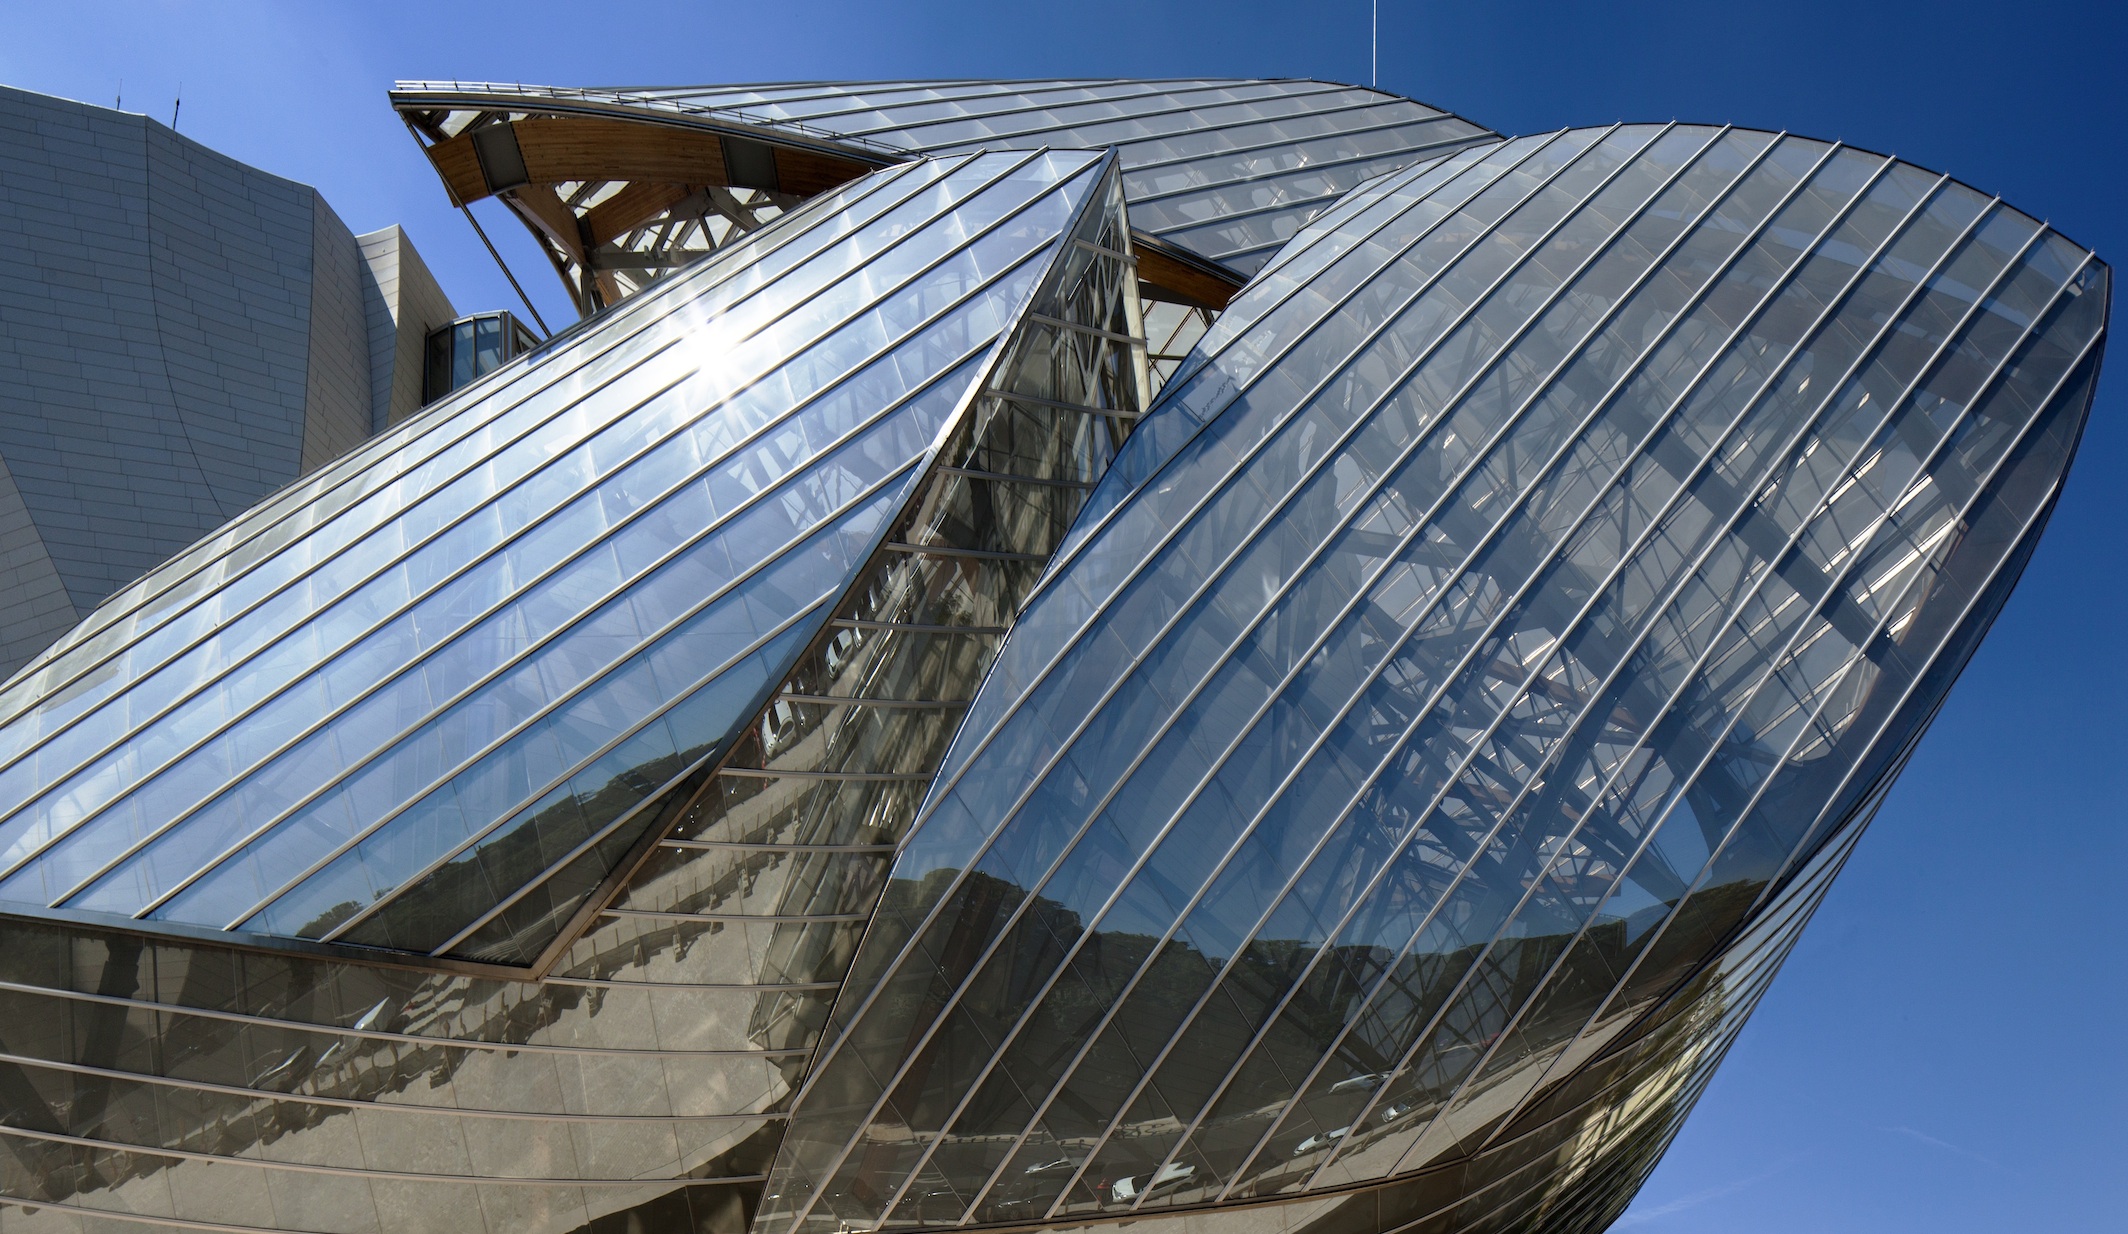 Fondation Louis Vuitton: Gehry’s glass cloud